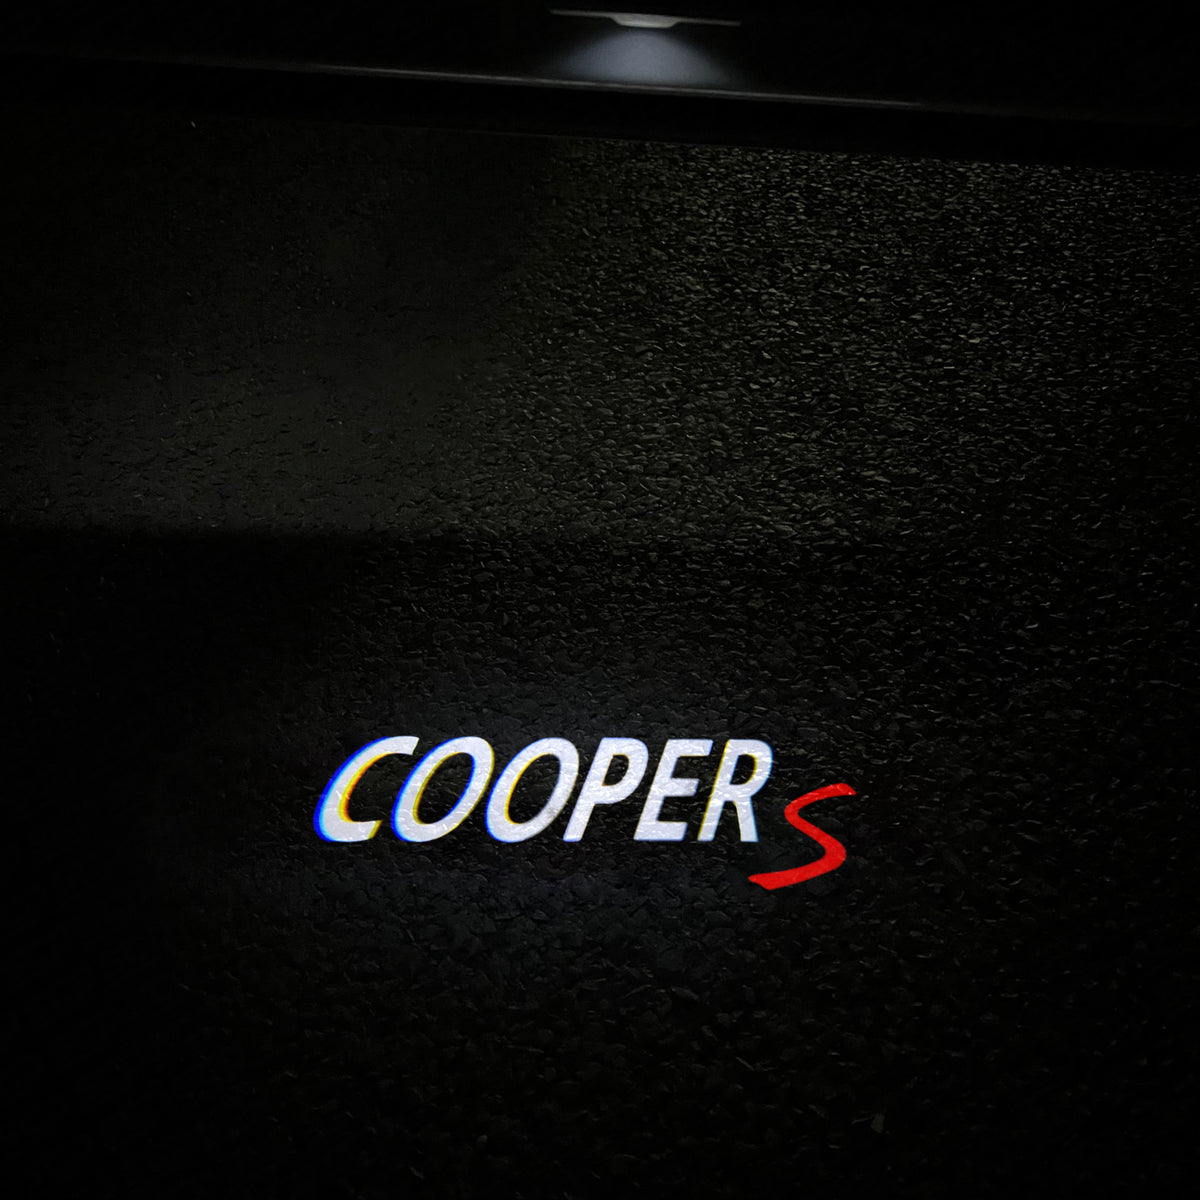 MINI LED Door Projector (Pair) - Cooper S